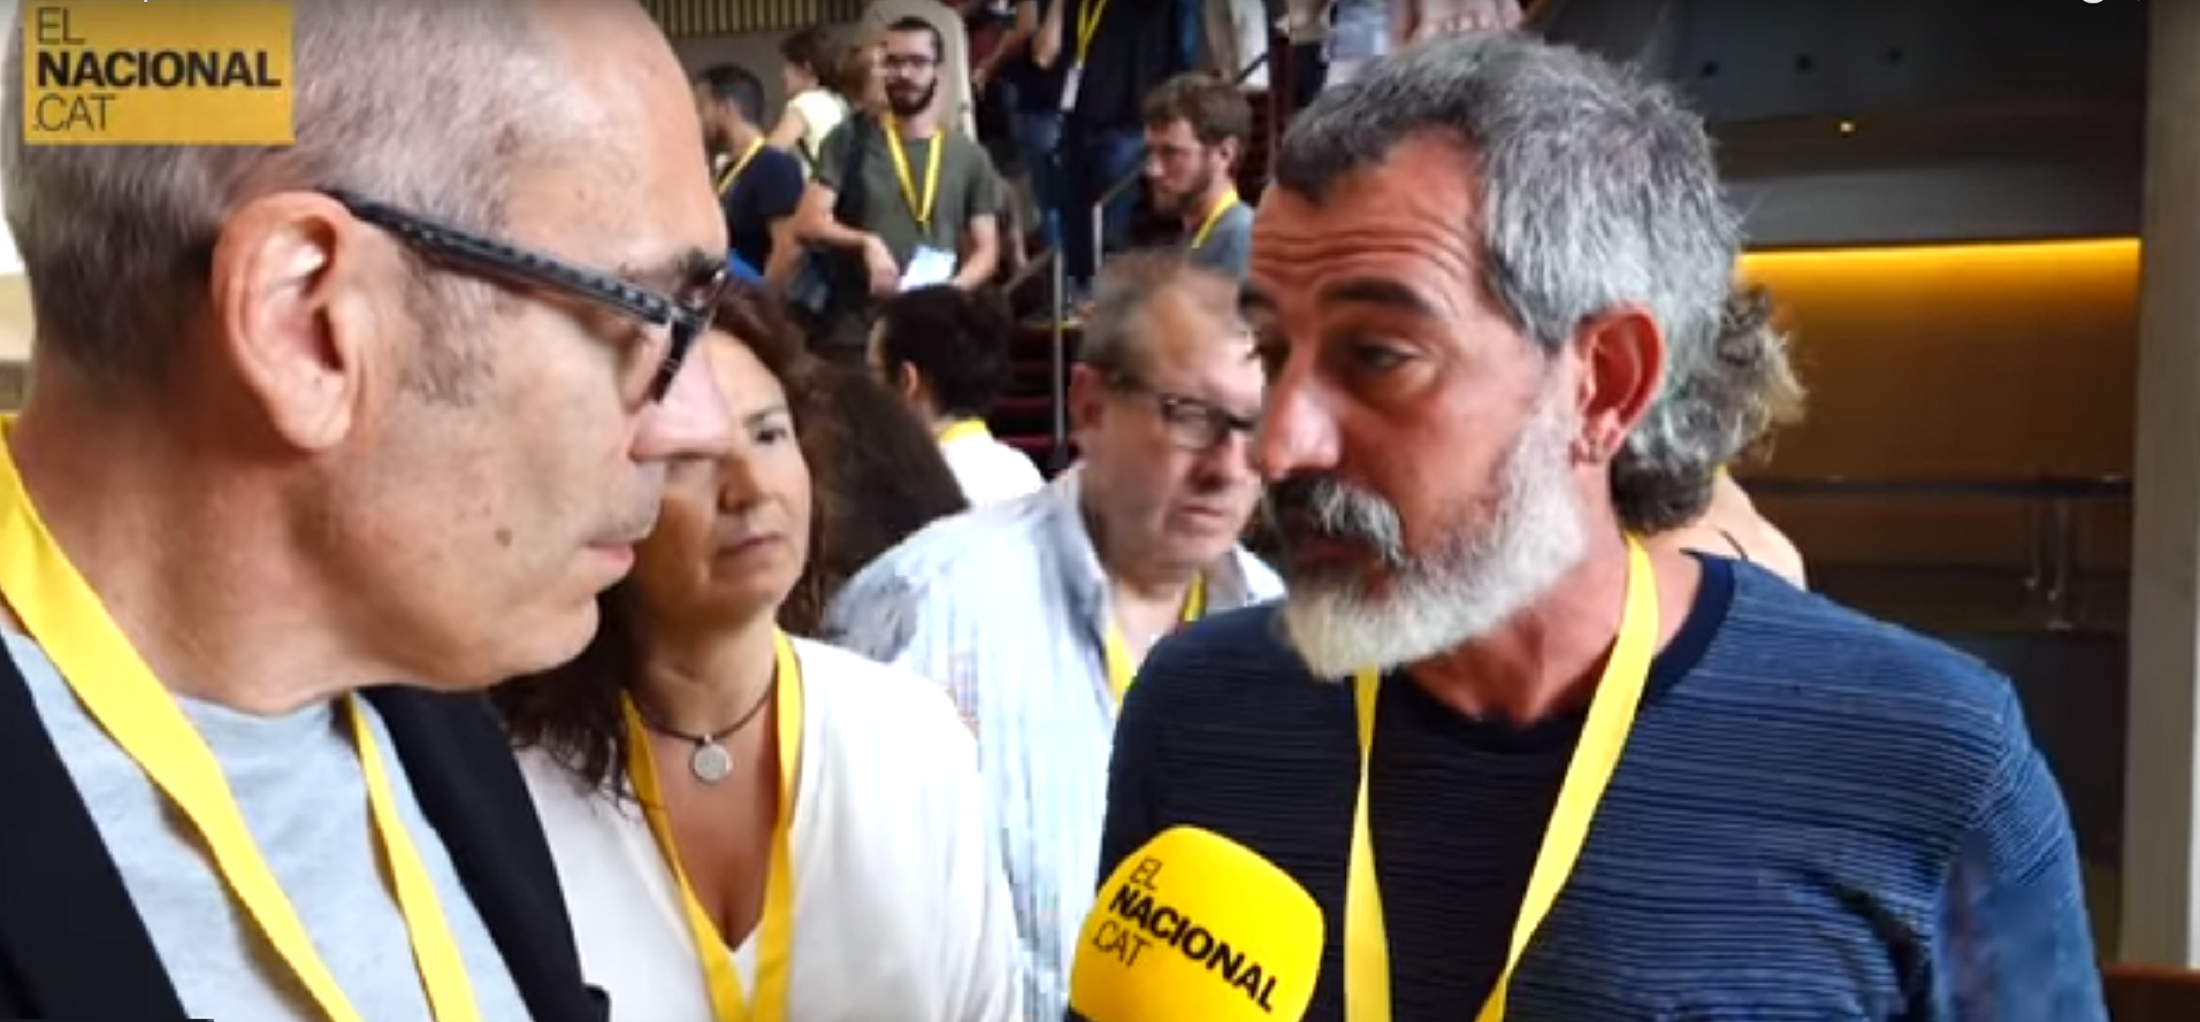 VÍDEO: L'Iu-tuber entrevista en exclusiva al líder de la candidatura alternativa en el PDeCAT